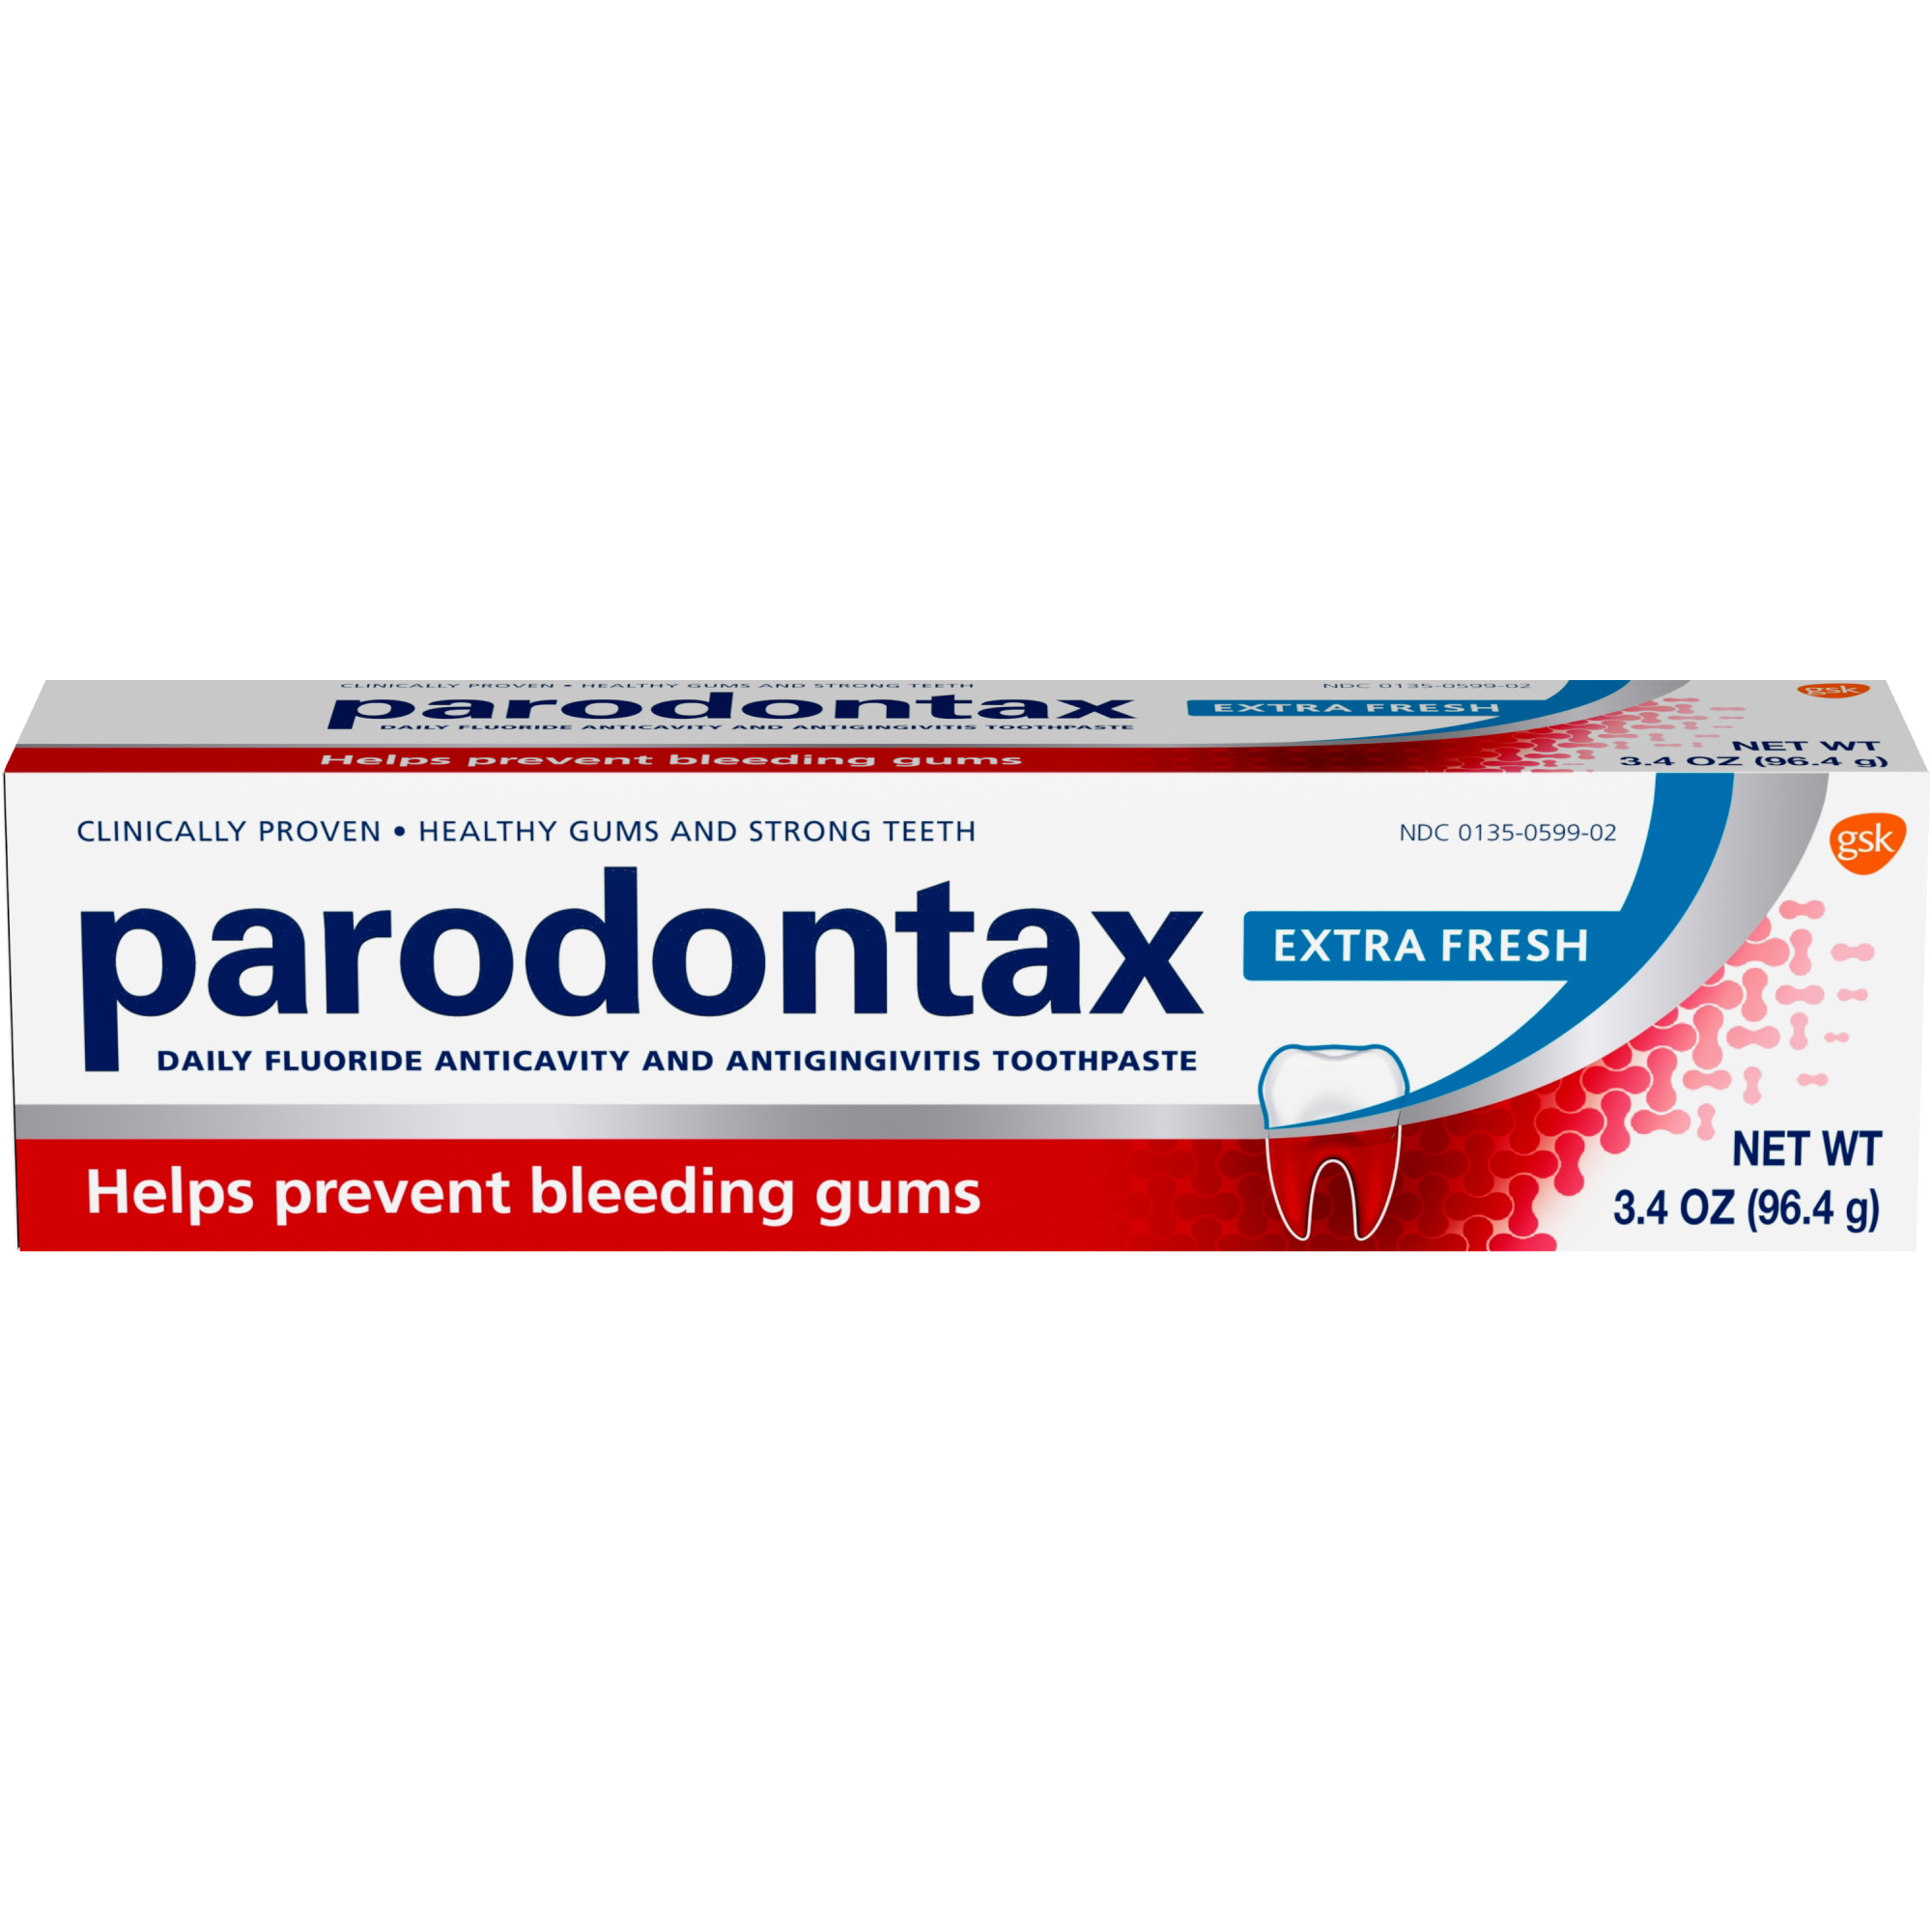 Parodontax Gingivitis Toothpaste for Bleeding Gums, Extra Fresh, 3.4 oz - image 1 of 11